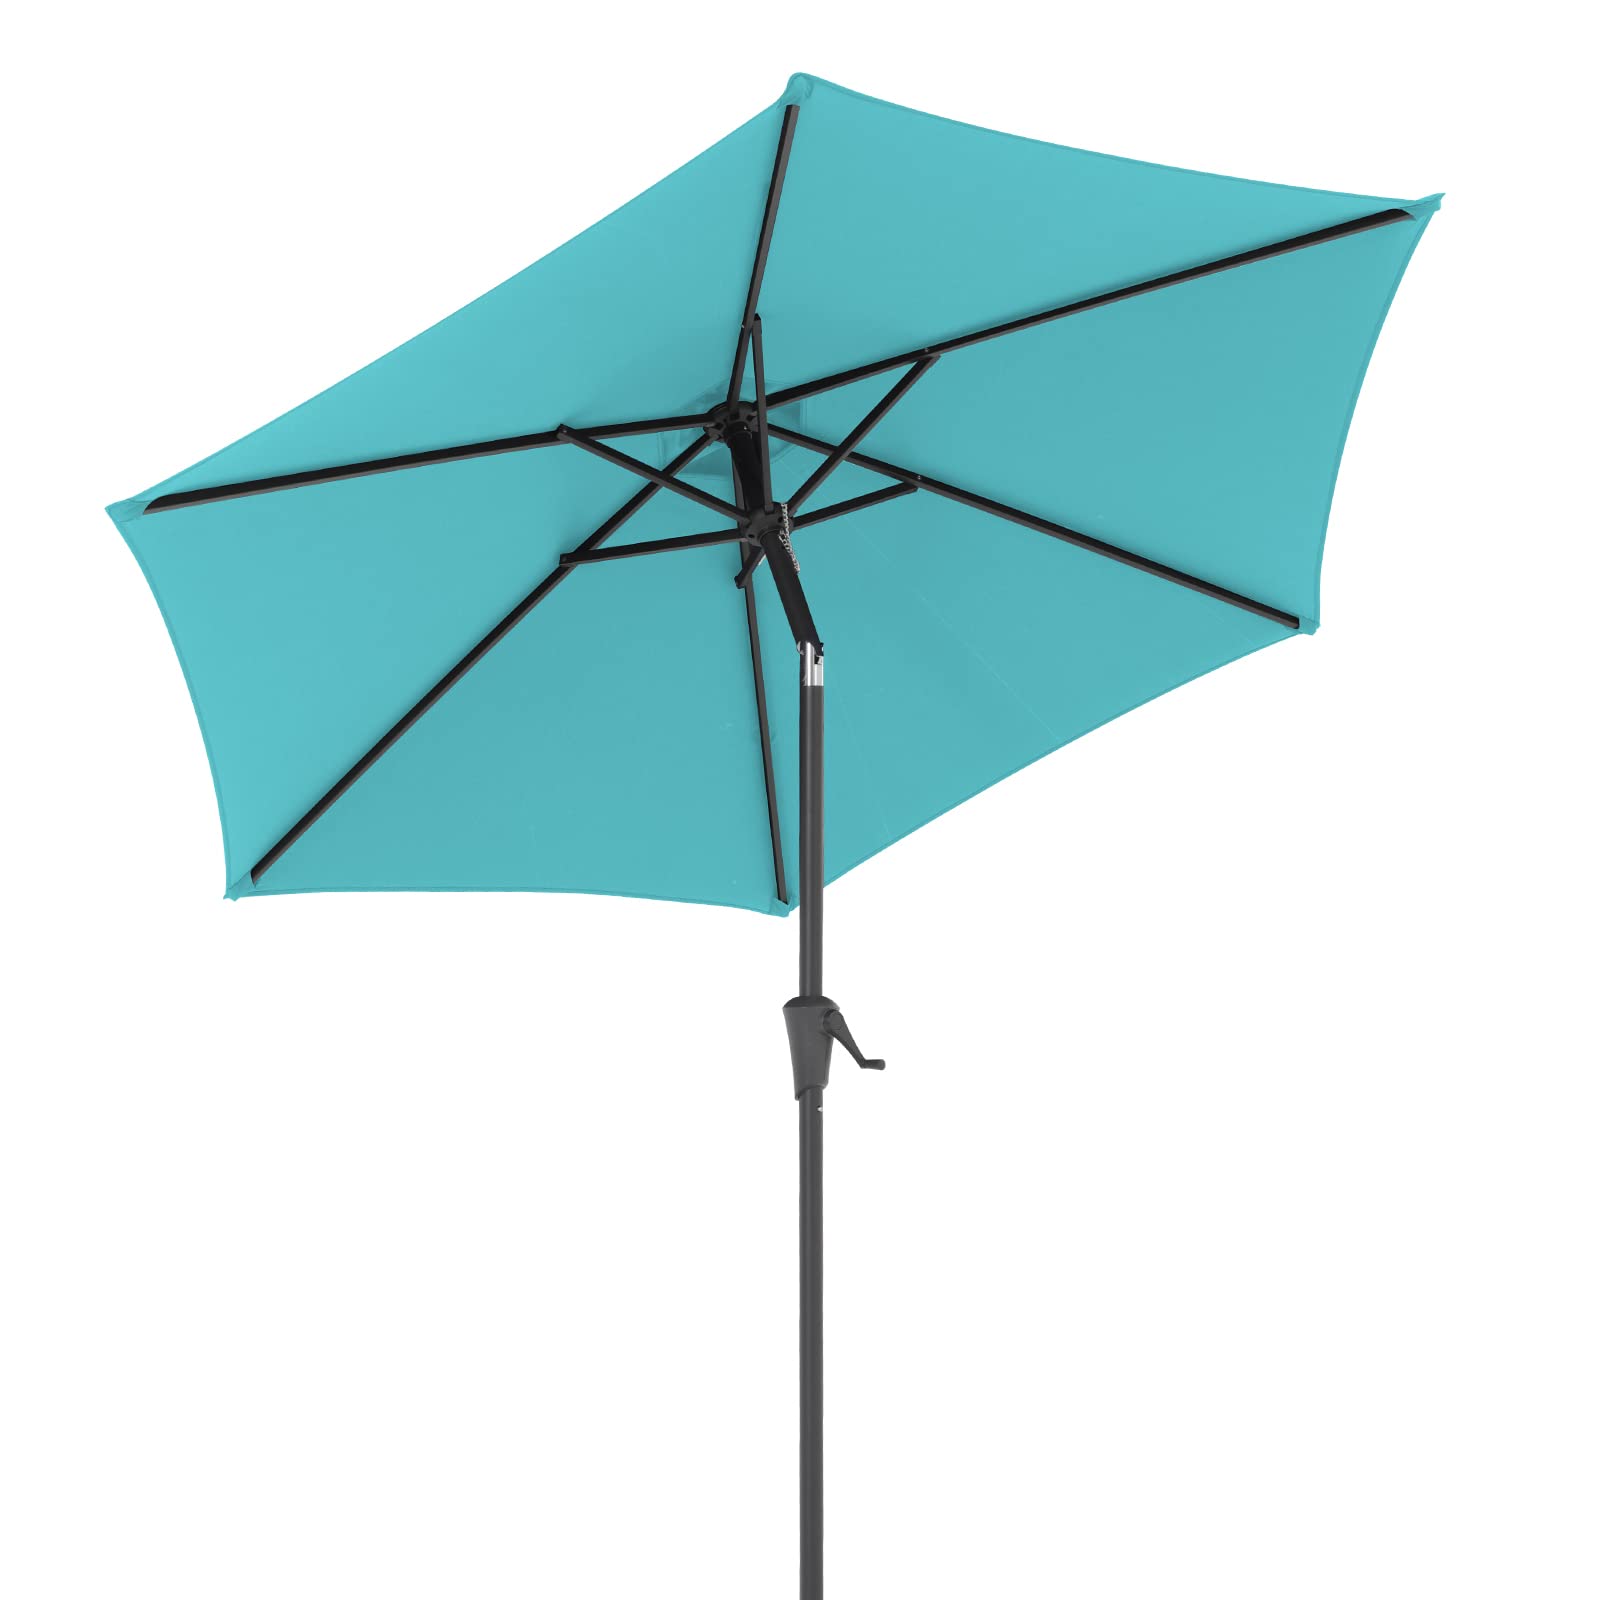 7.5' Patio Round Umbrella, Outdoor Polyester Table Market Umbrella, Turquoise